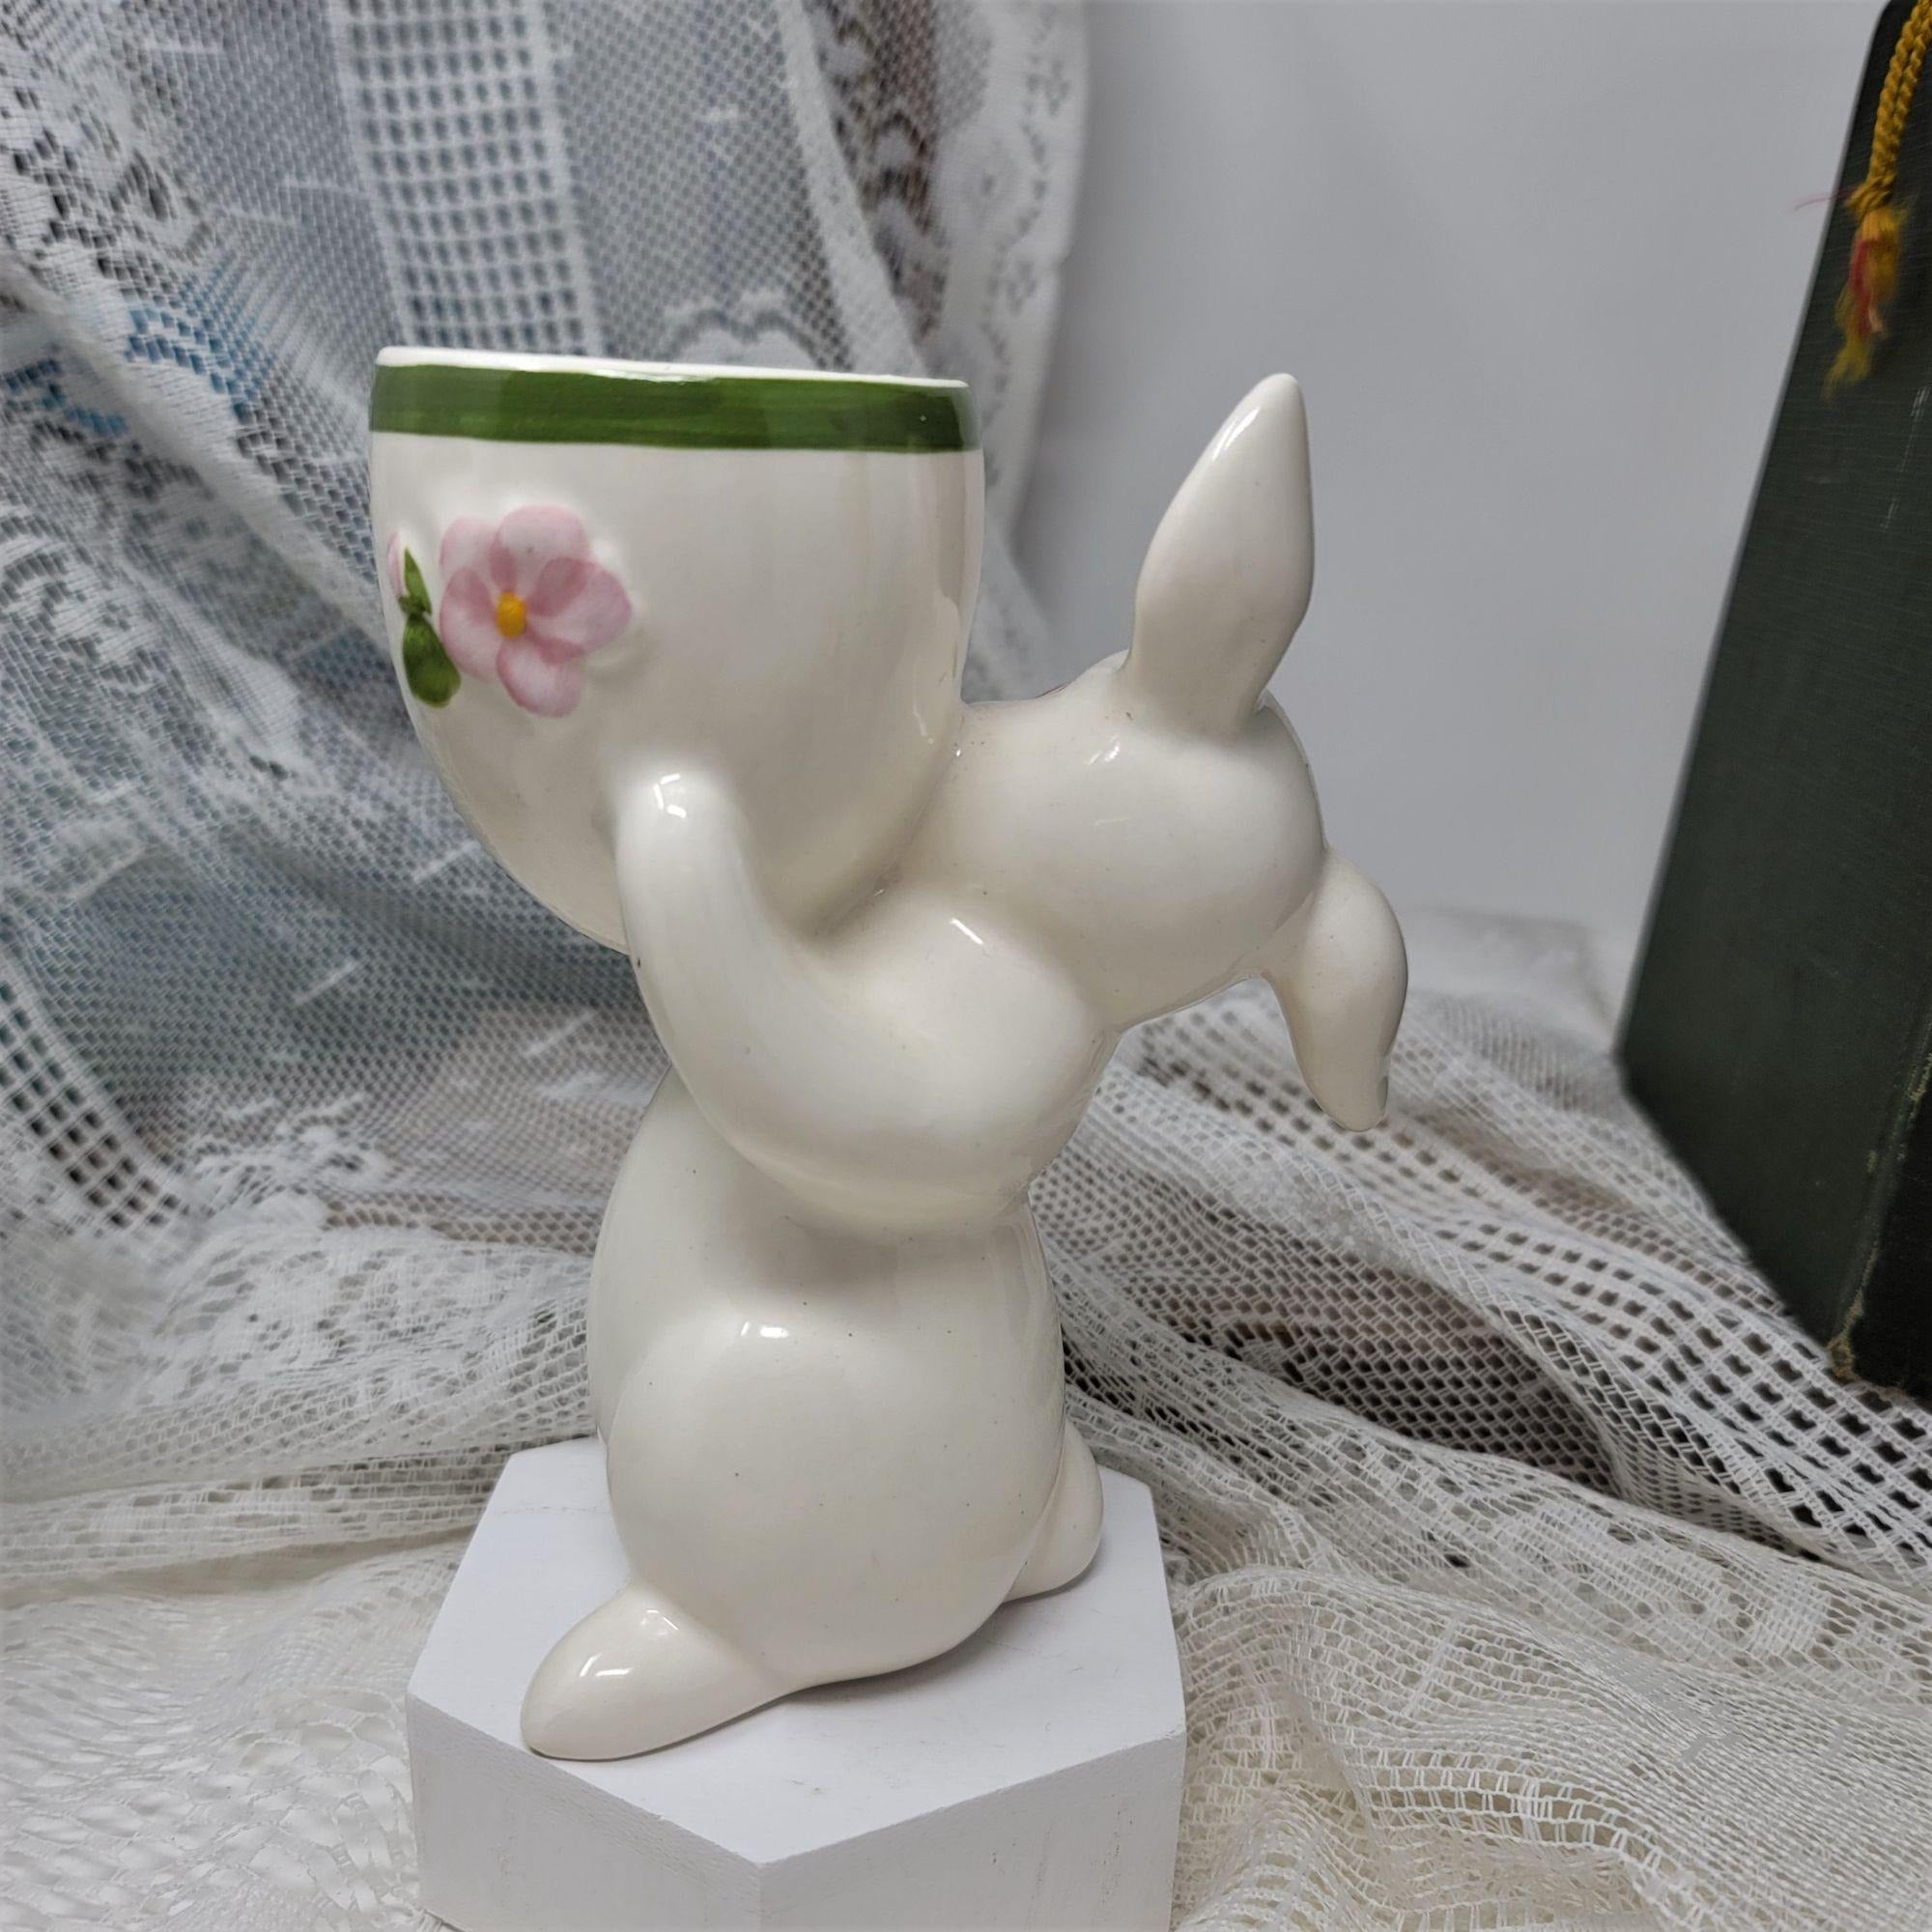 AVON 1981 Sunny Bunny Ceramic Candle Holder